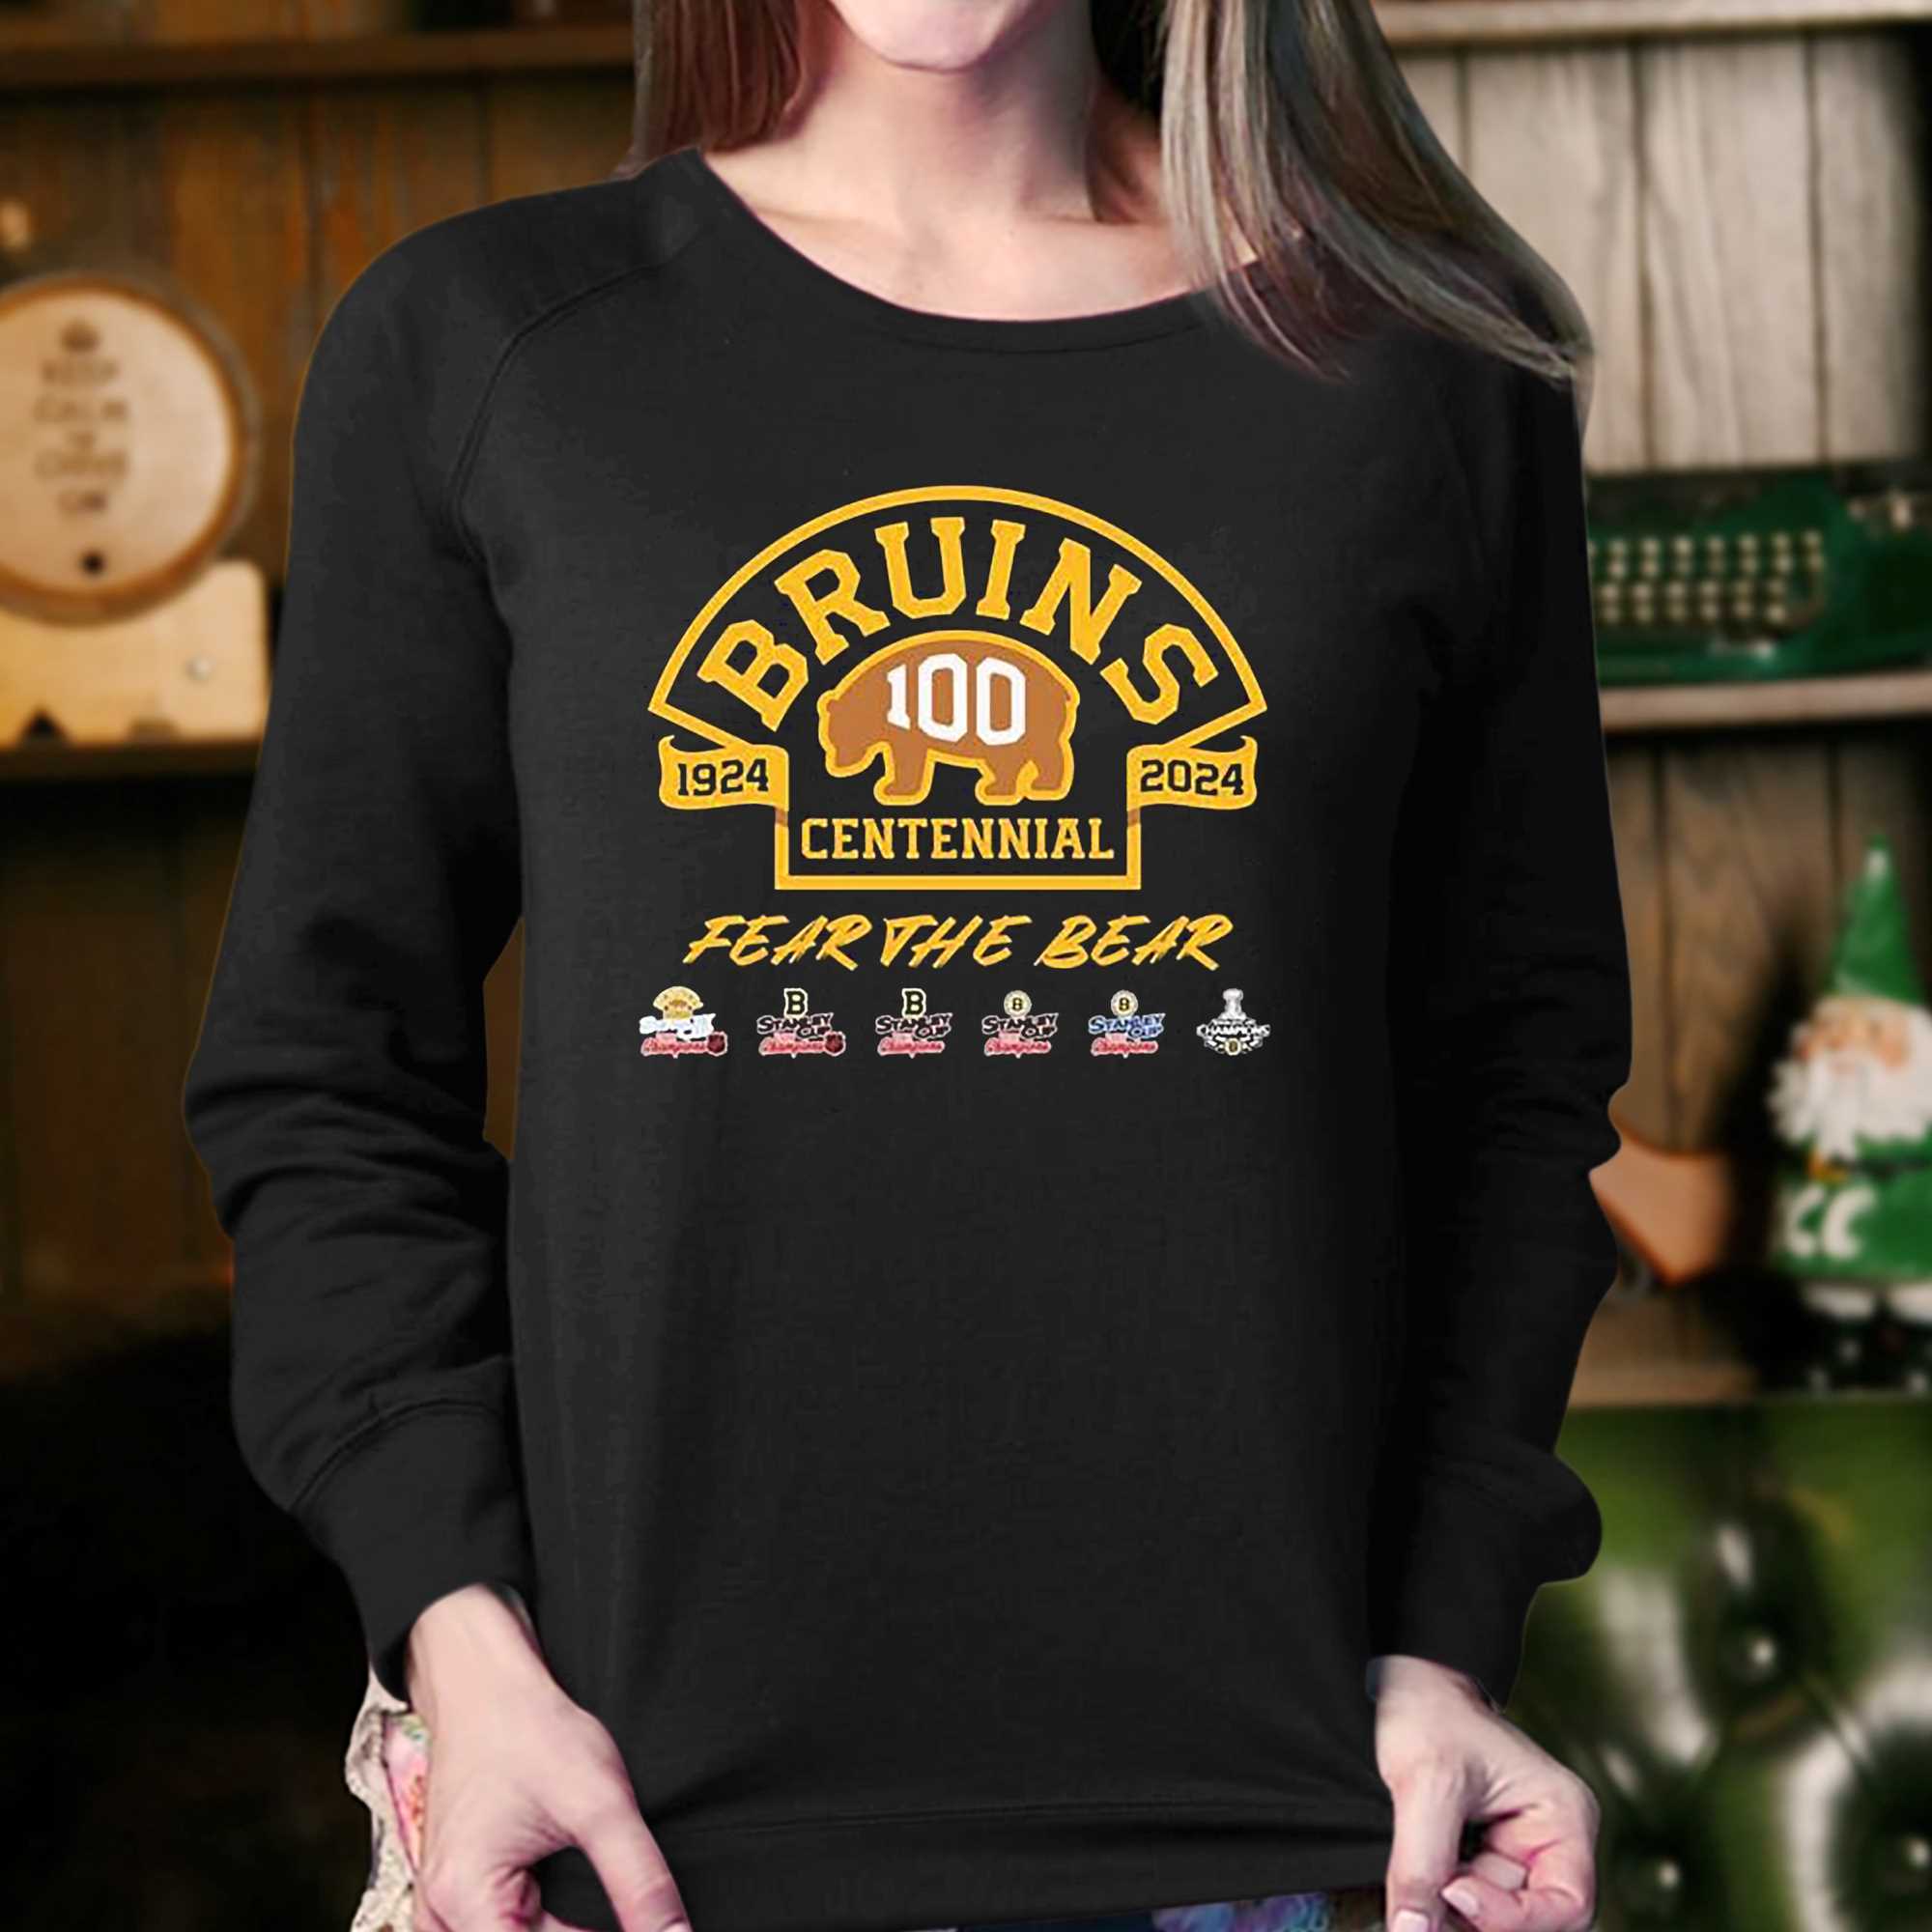 Boston Bruins Apparel, Bruins 100th Anniversary Gear, Boston